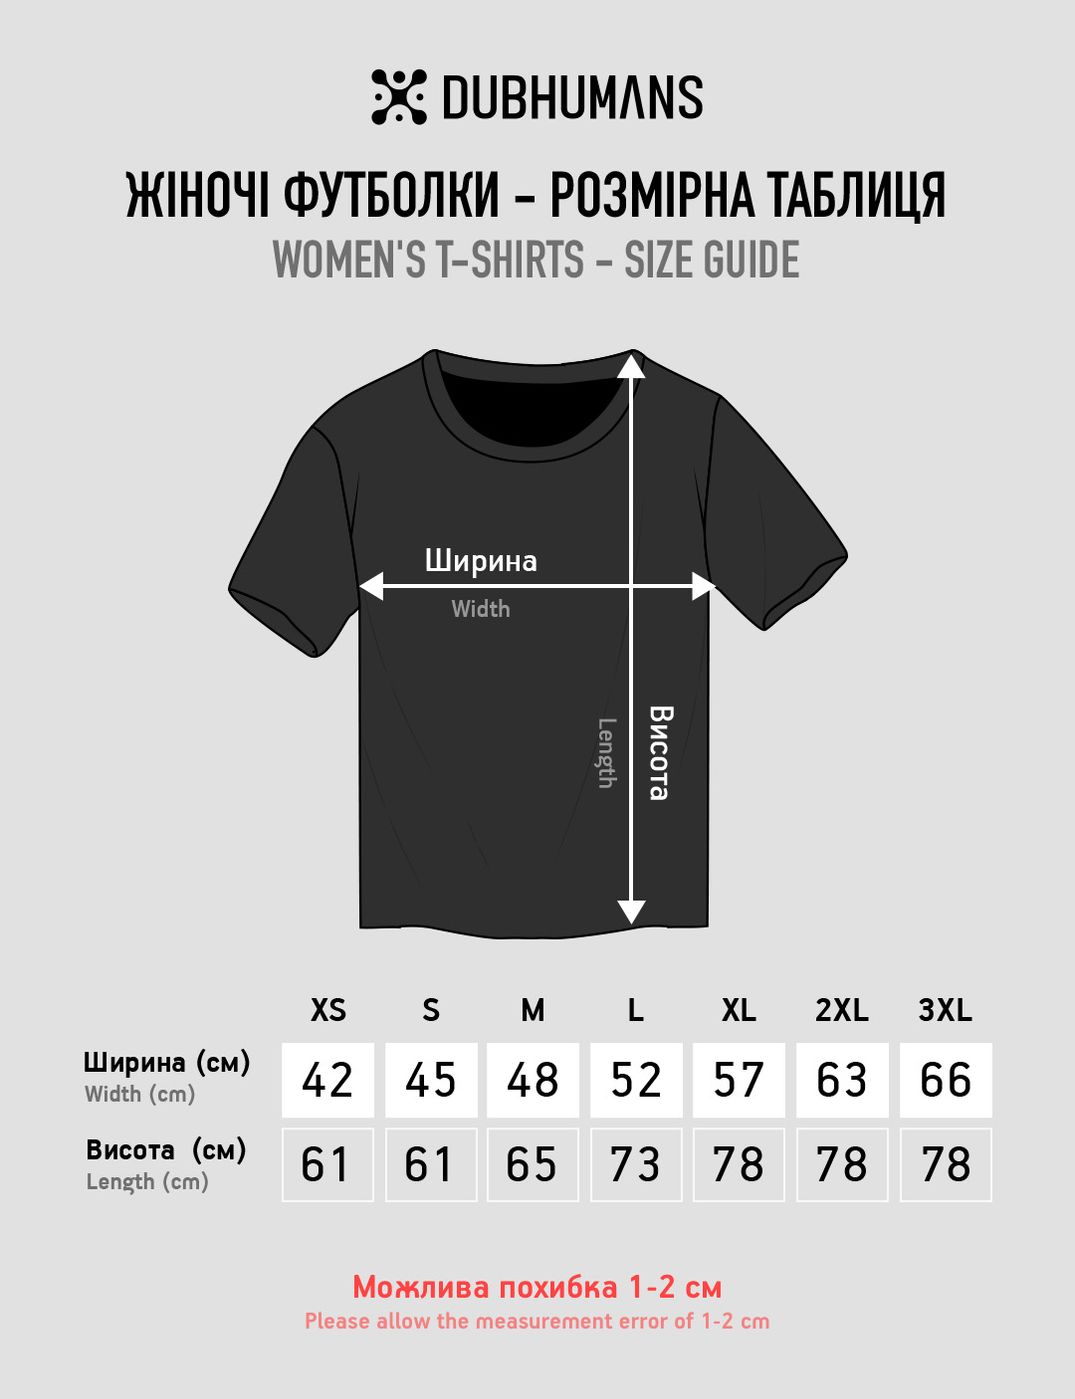 Women's T-shirt "Carpathian Blue Mountains", Black, M